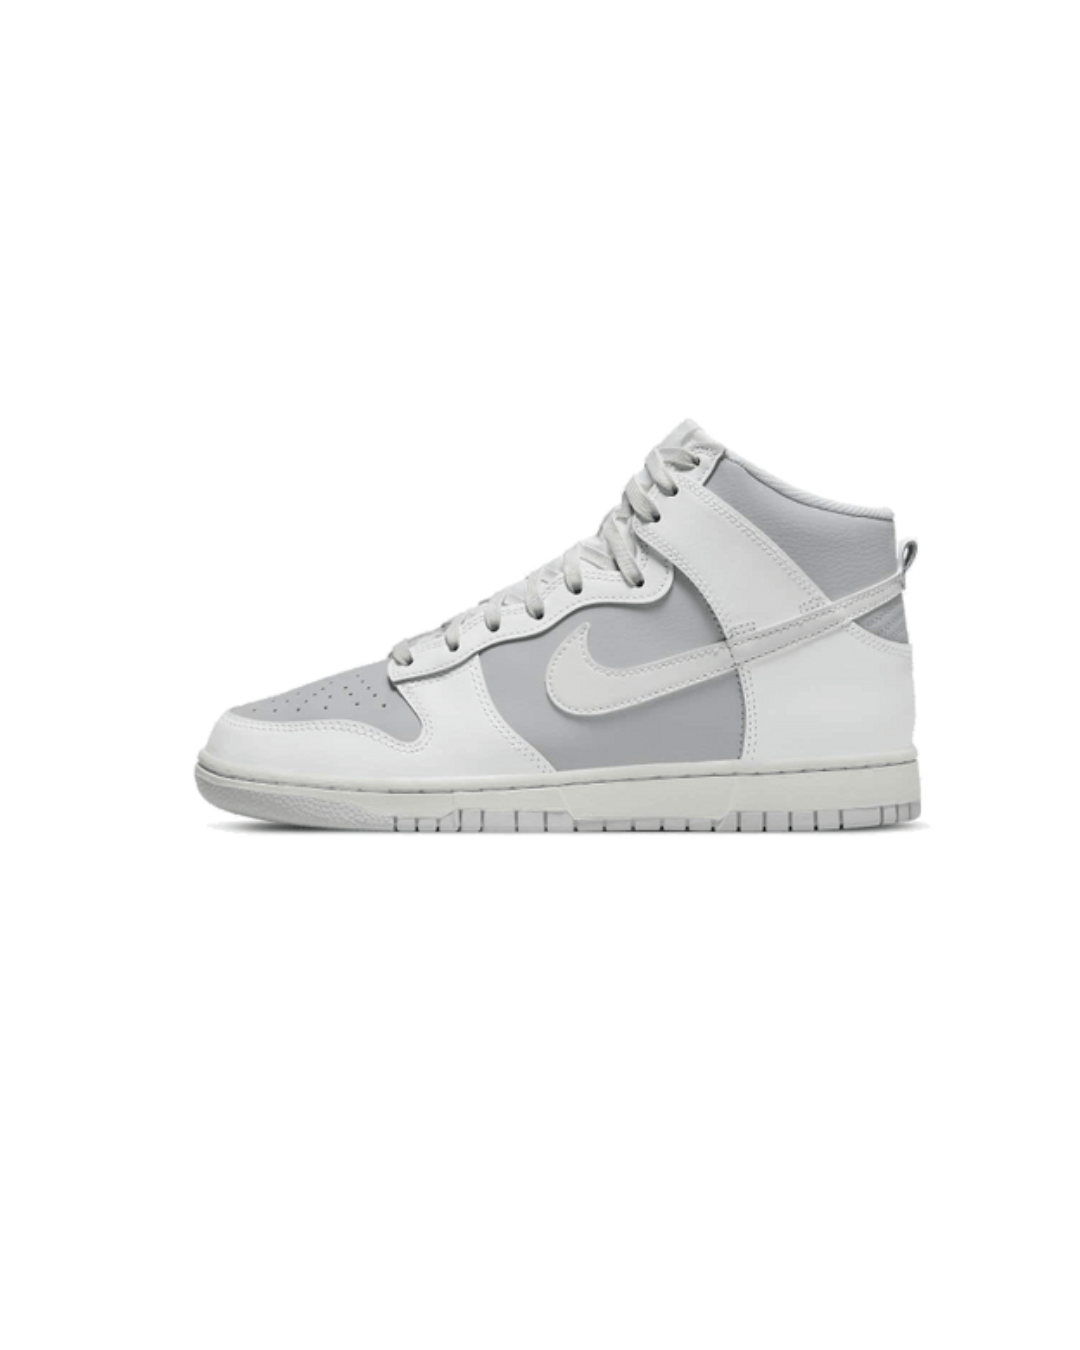 Nike Dunk High Retro Grey White